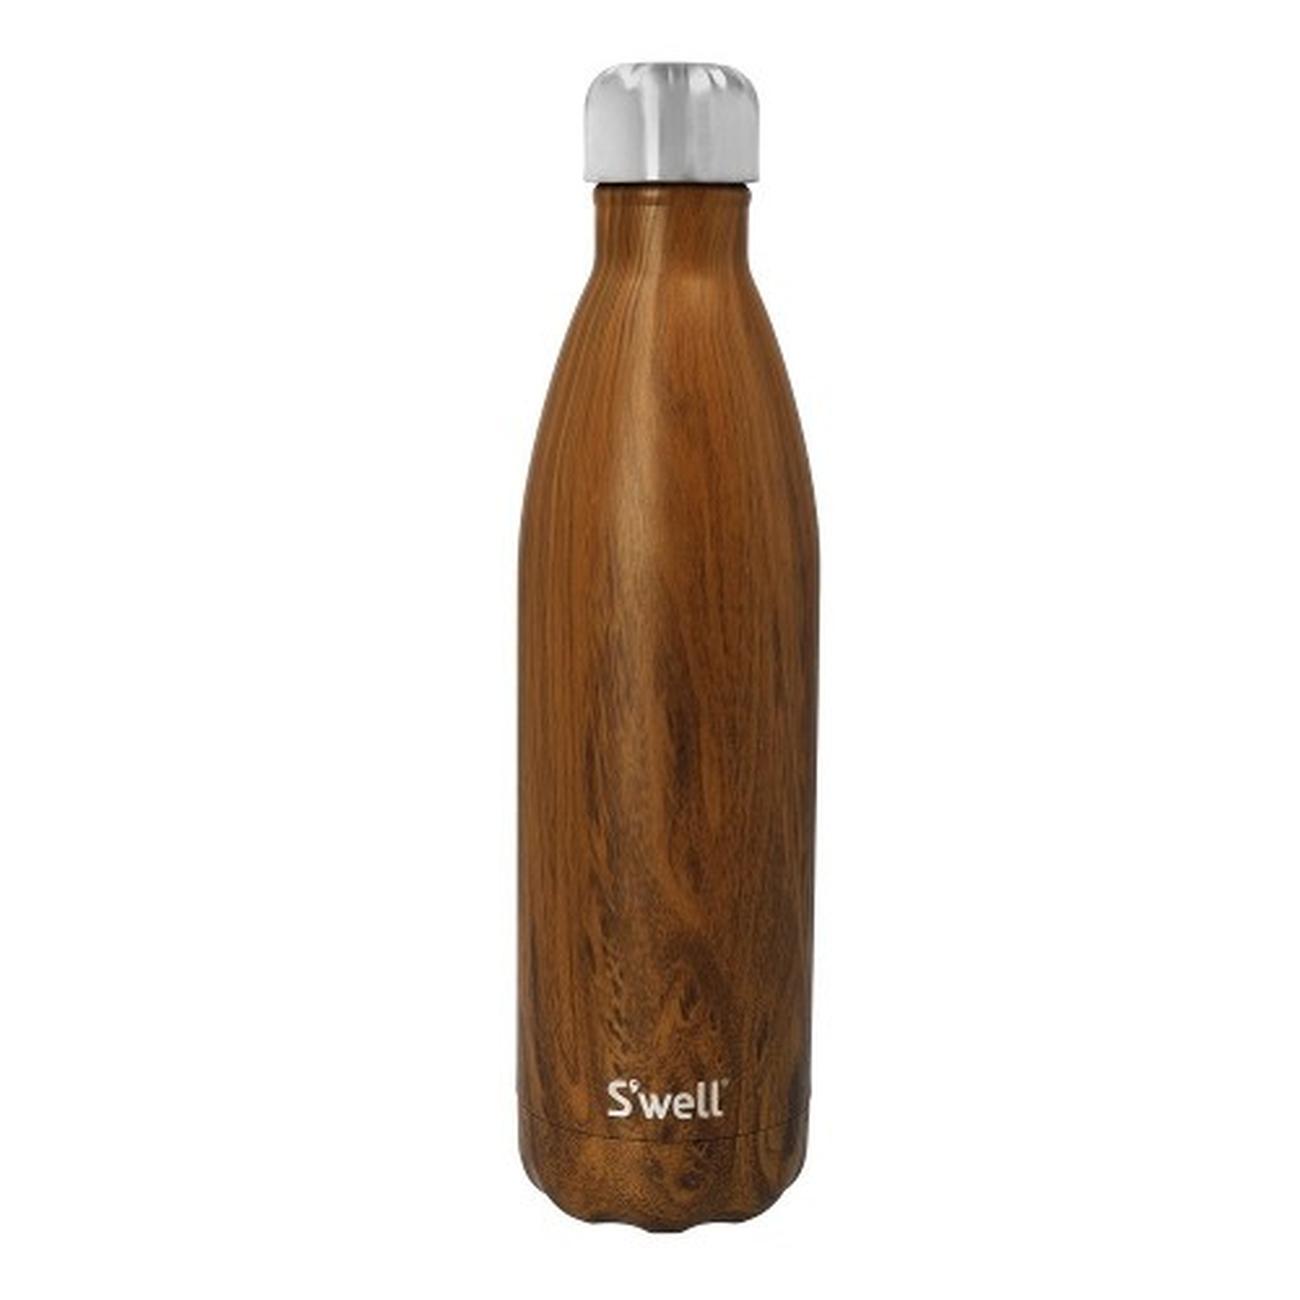 swell-teakwood-bottle-750ml - S'well Teakwood Bottle 750ml